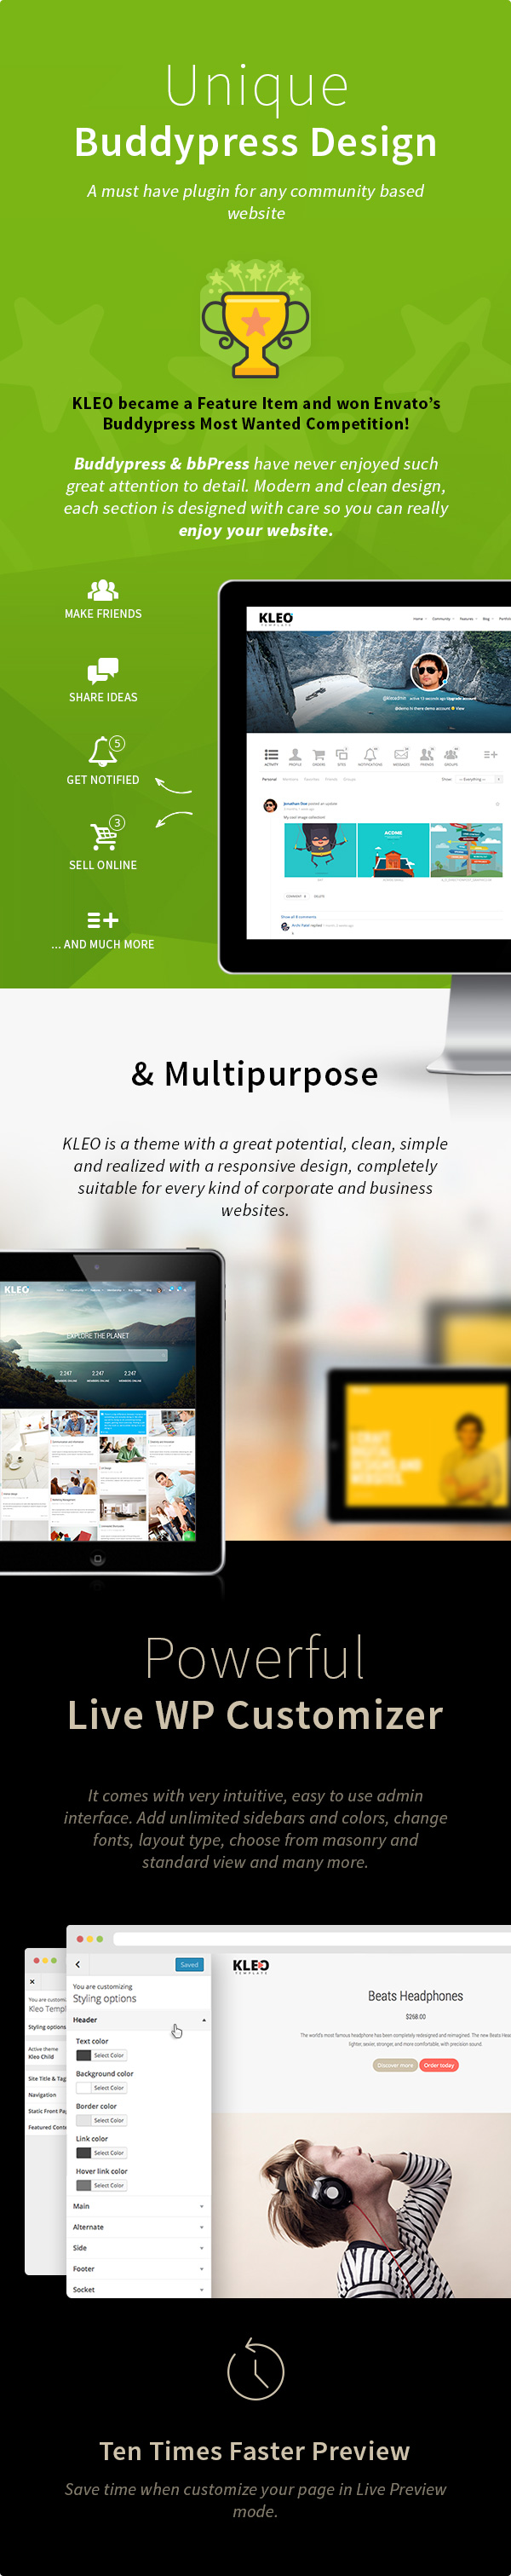 KLEO - Pro Community Focused, Multi-Purpose BuddyPress Theme - 8